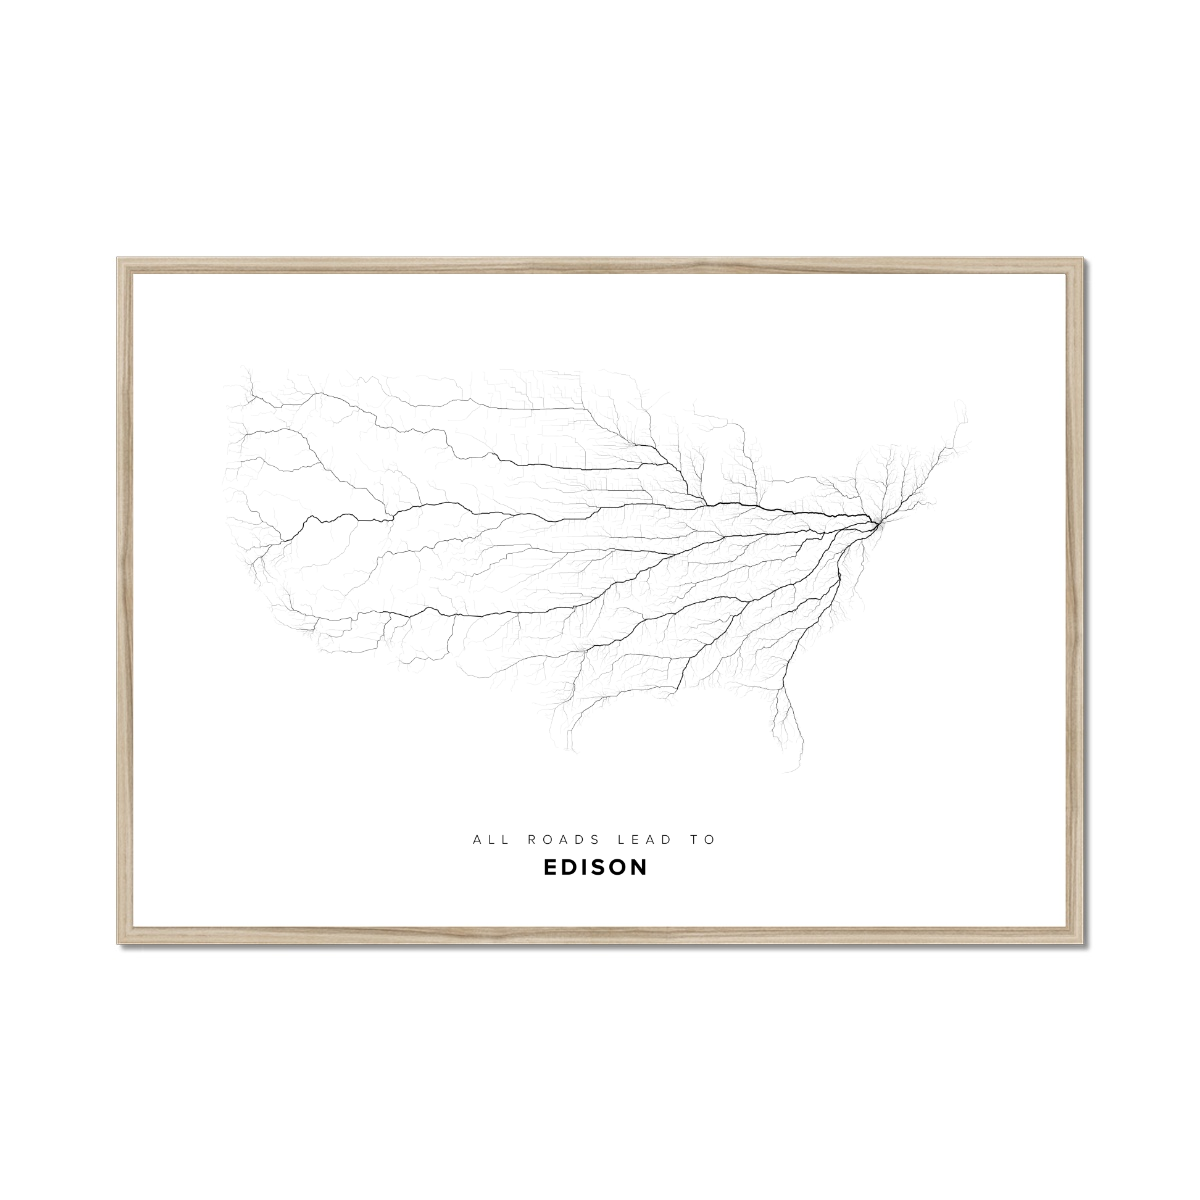 All roads lead to Edison (United States of America) Fine Art Map Print